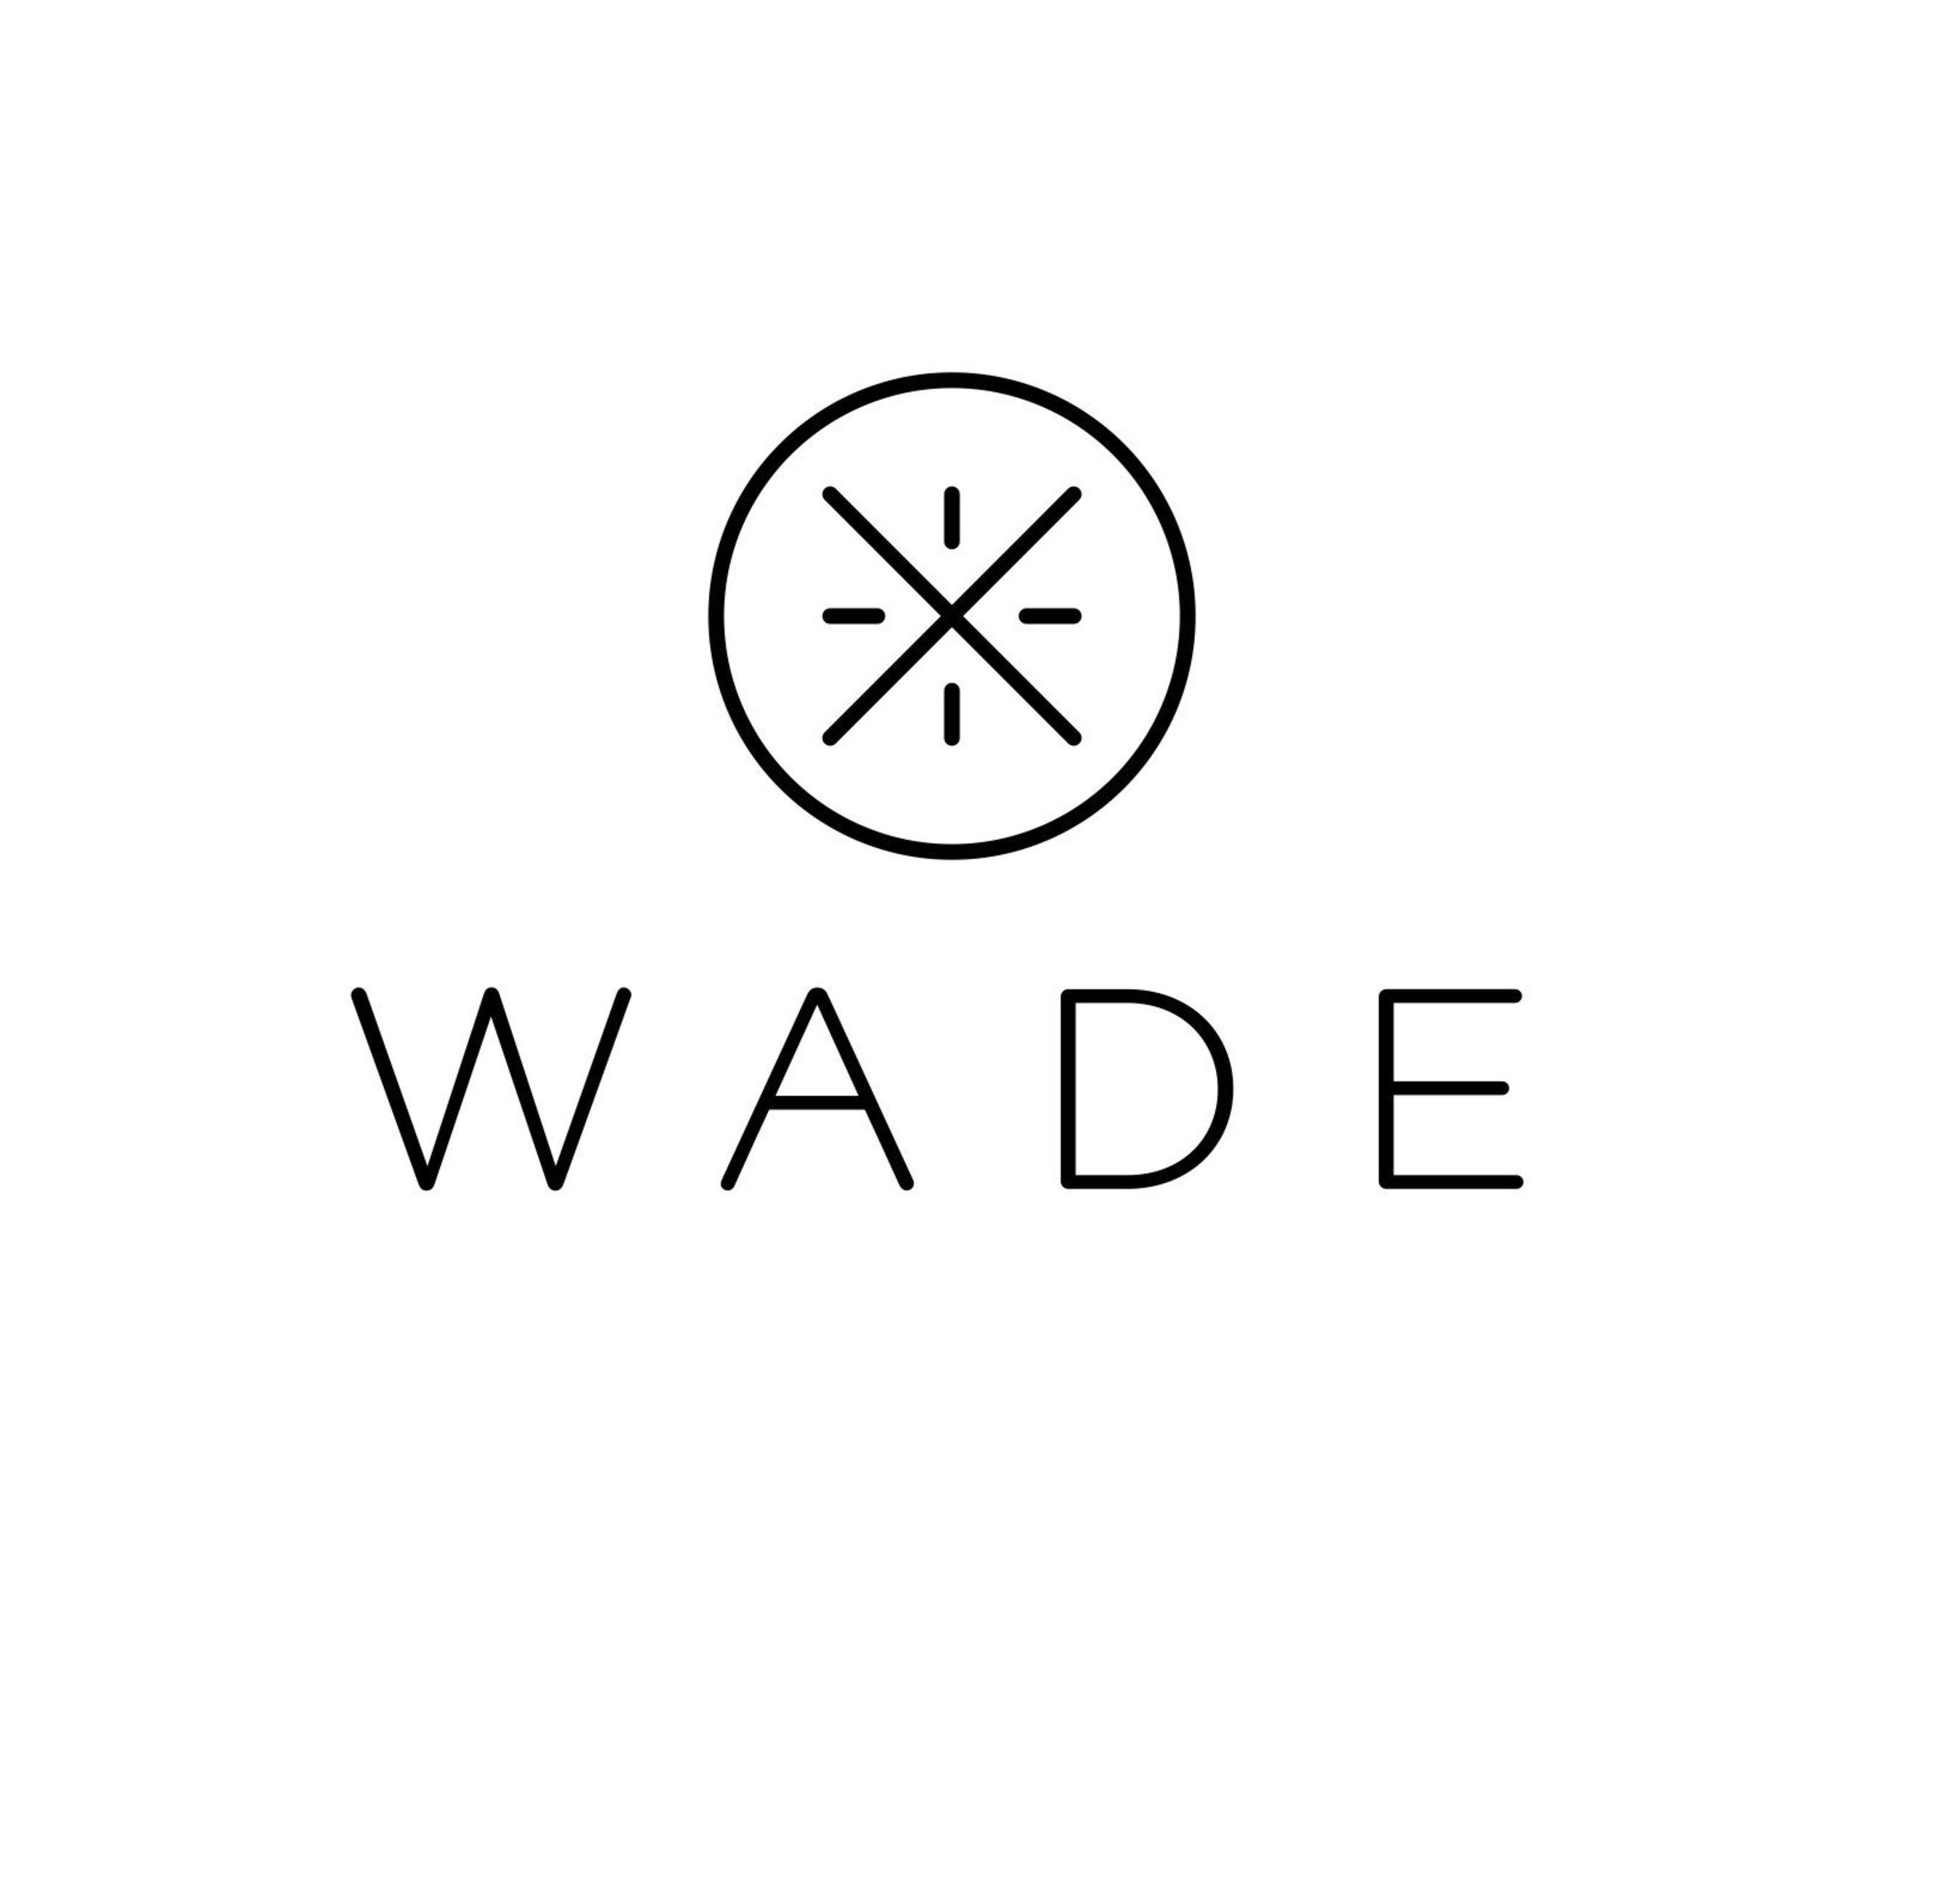 Dwyane Wade Logo - NBA Champion Dwyane Wade and Naked Announce Partnership to Grow ...